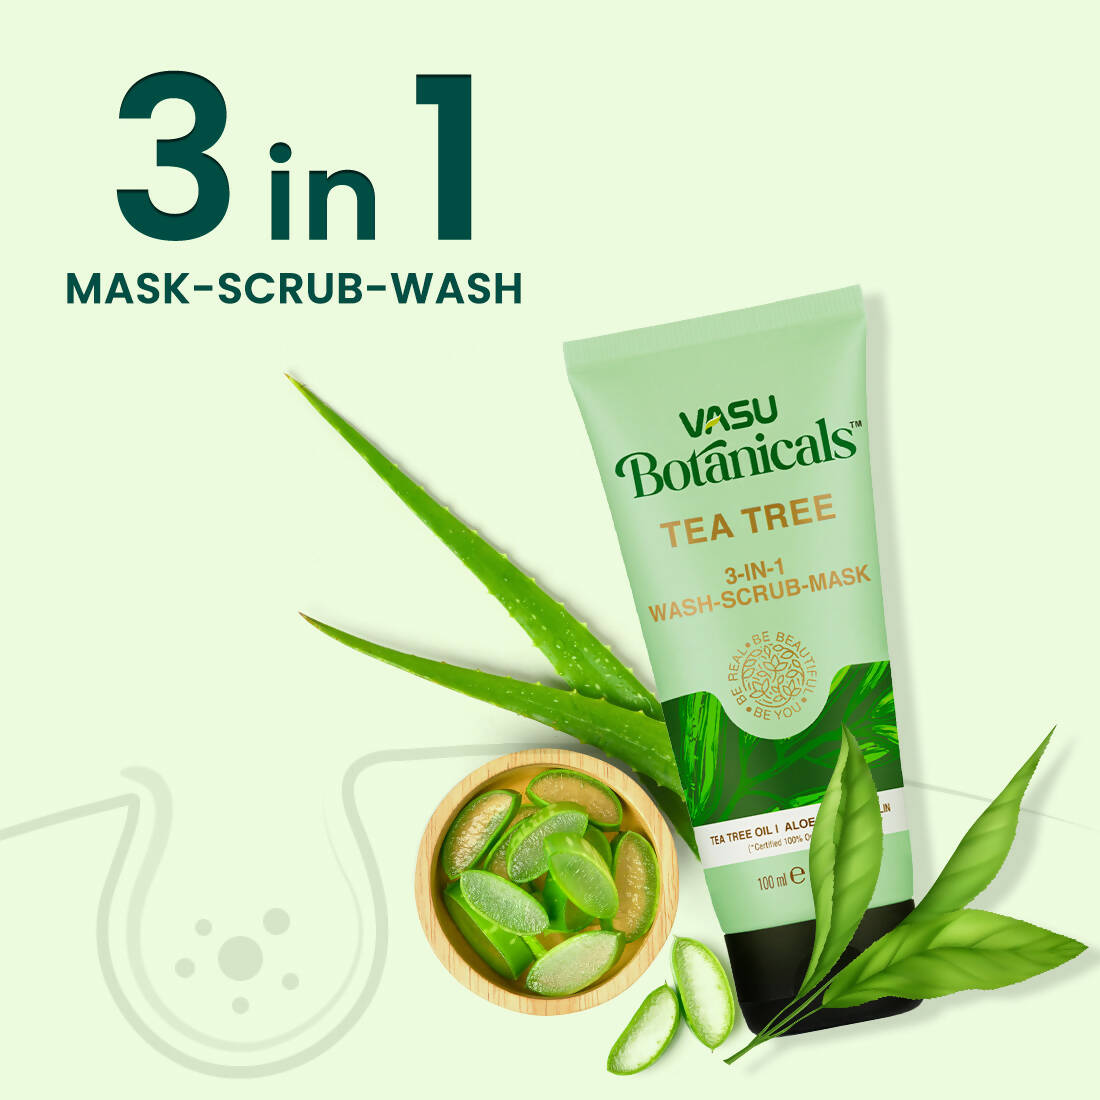 Vasu Healthcare Botanicals Tea Tree 3 in 1 Face Mask-Scrub-Wash